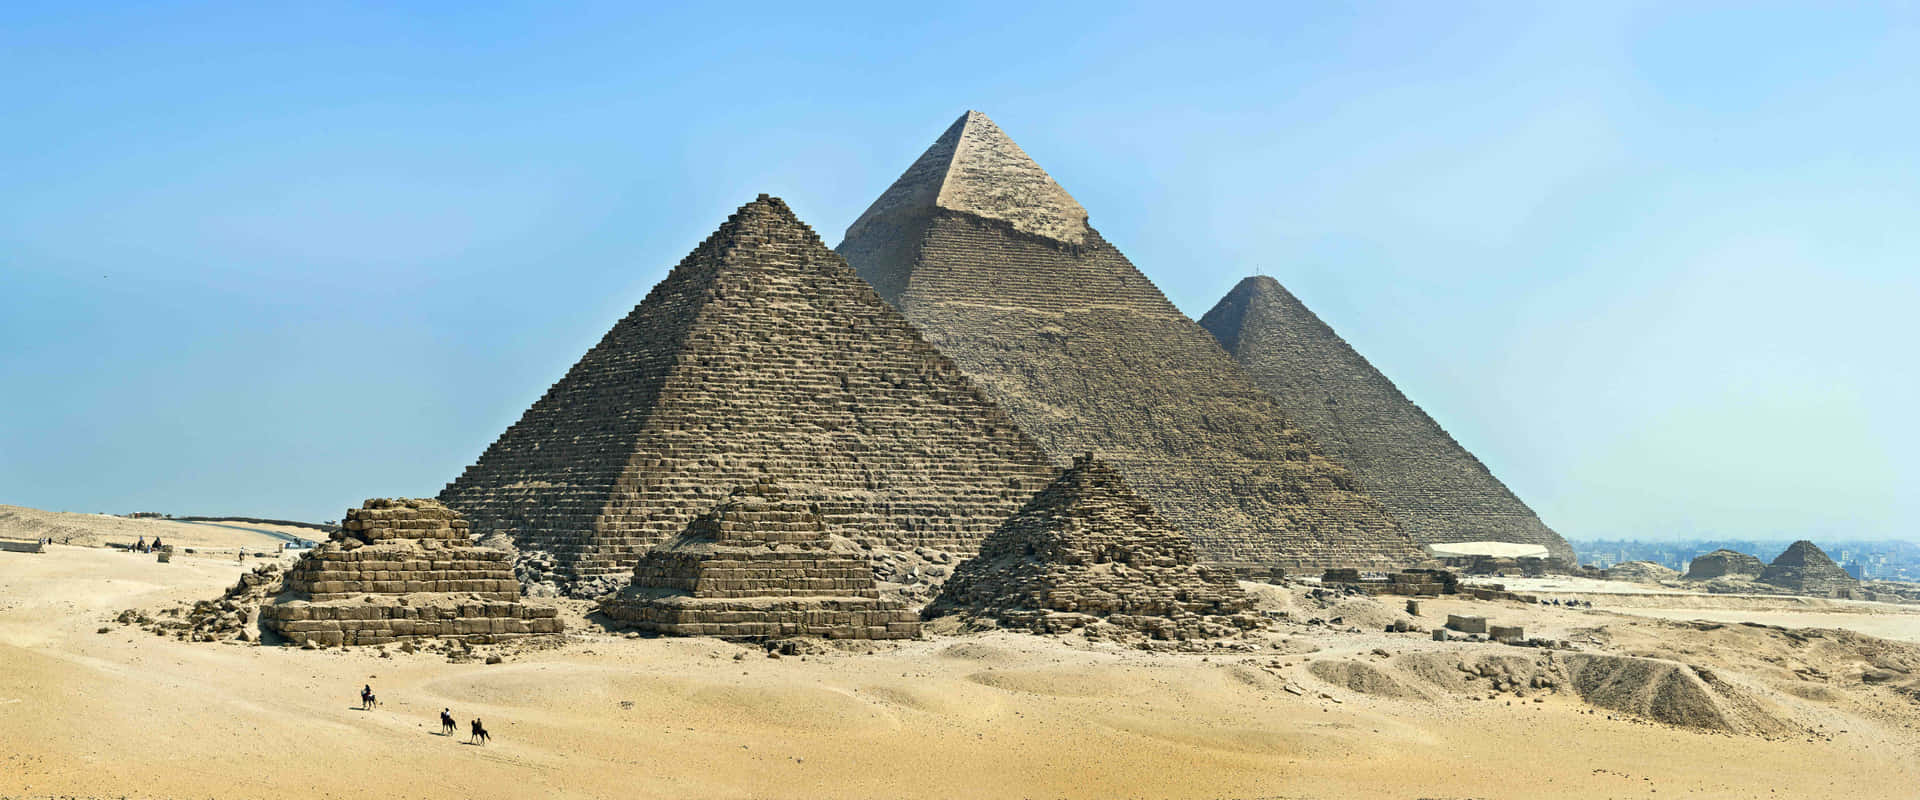 Pyramidernai Giza Vid Pyramidkomplexet I Egypten. Wallpaper